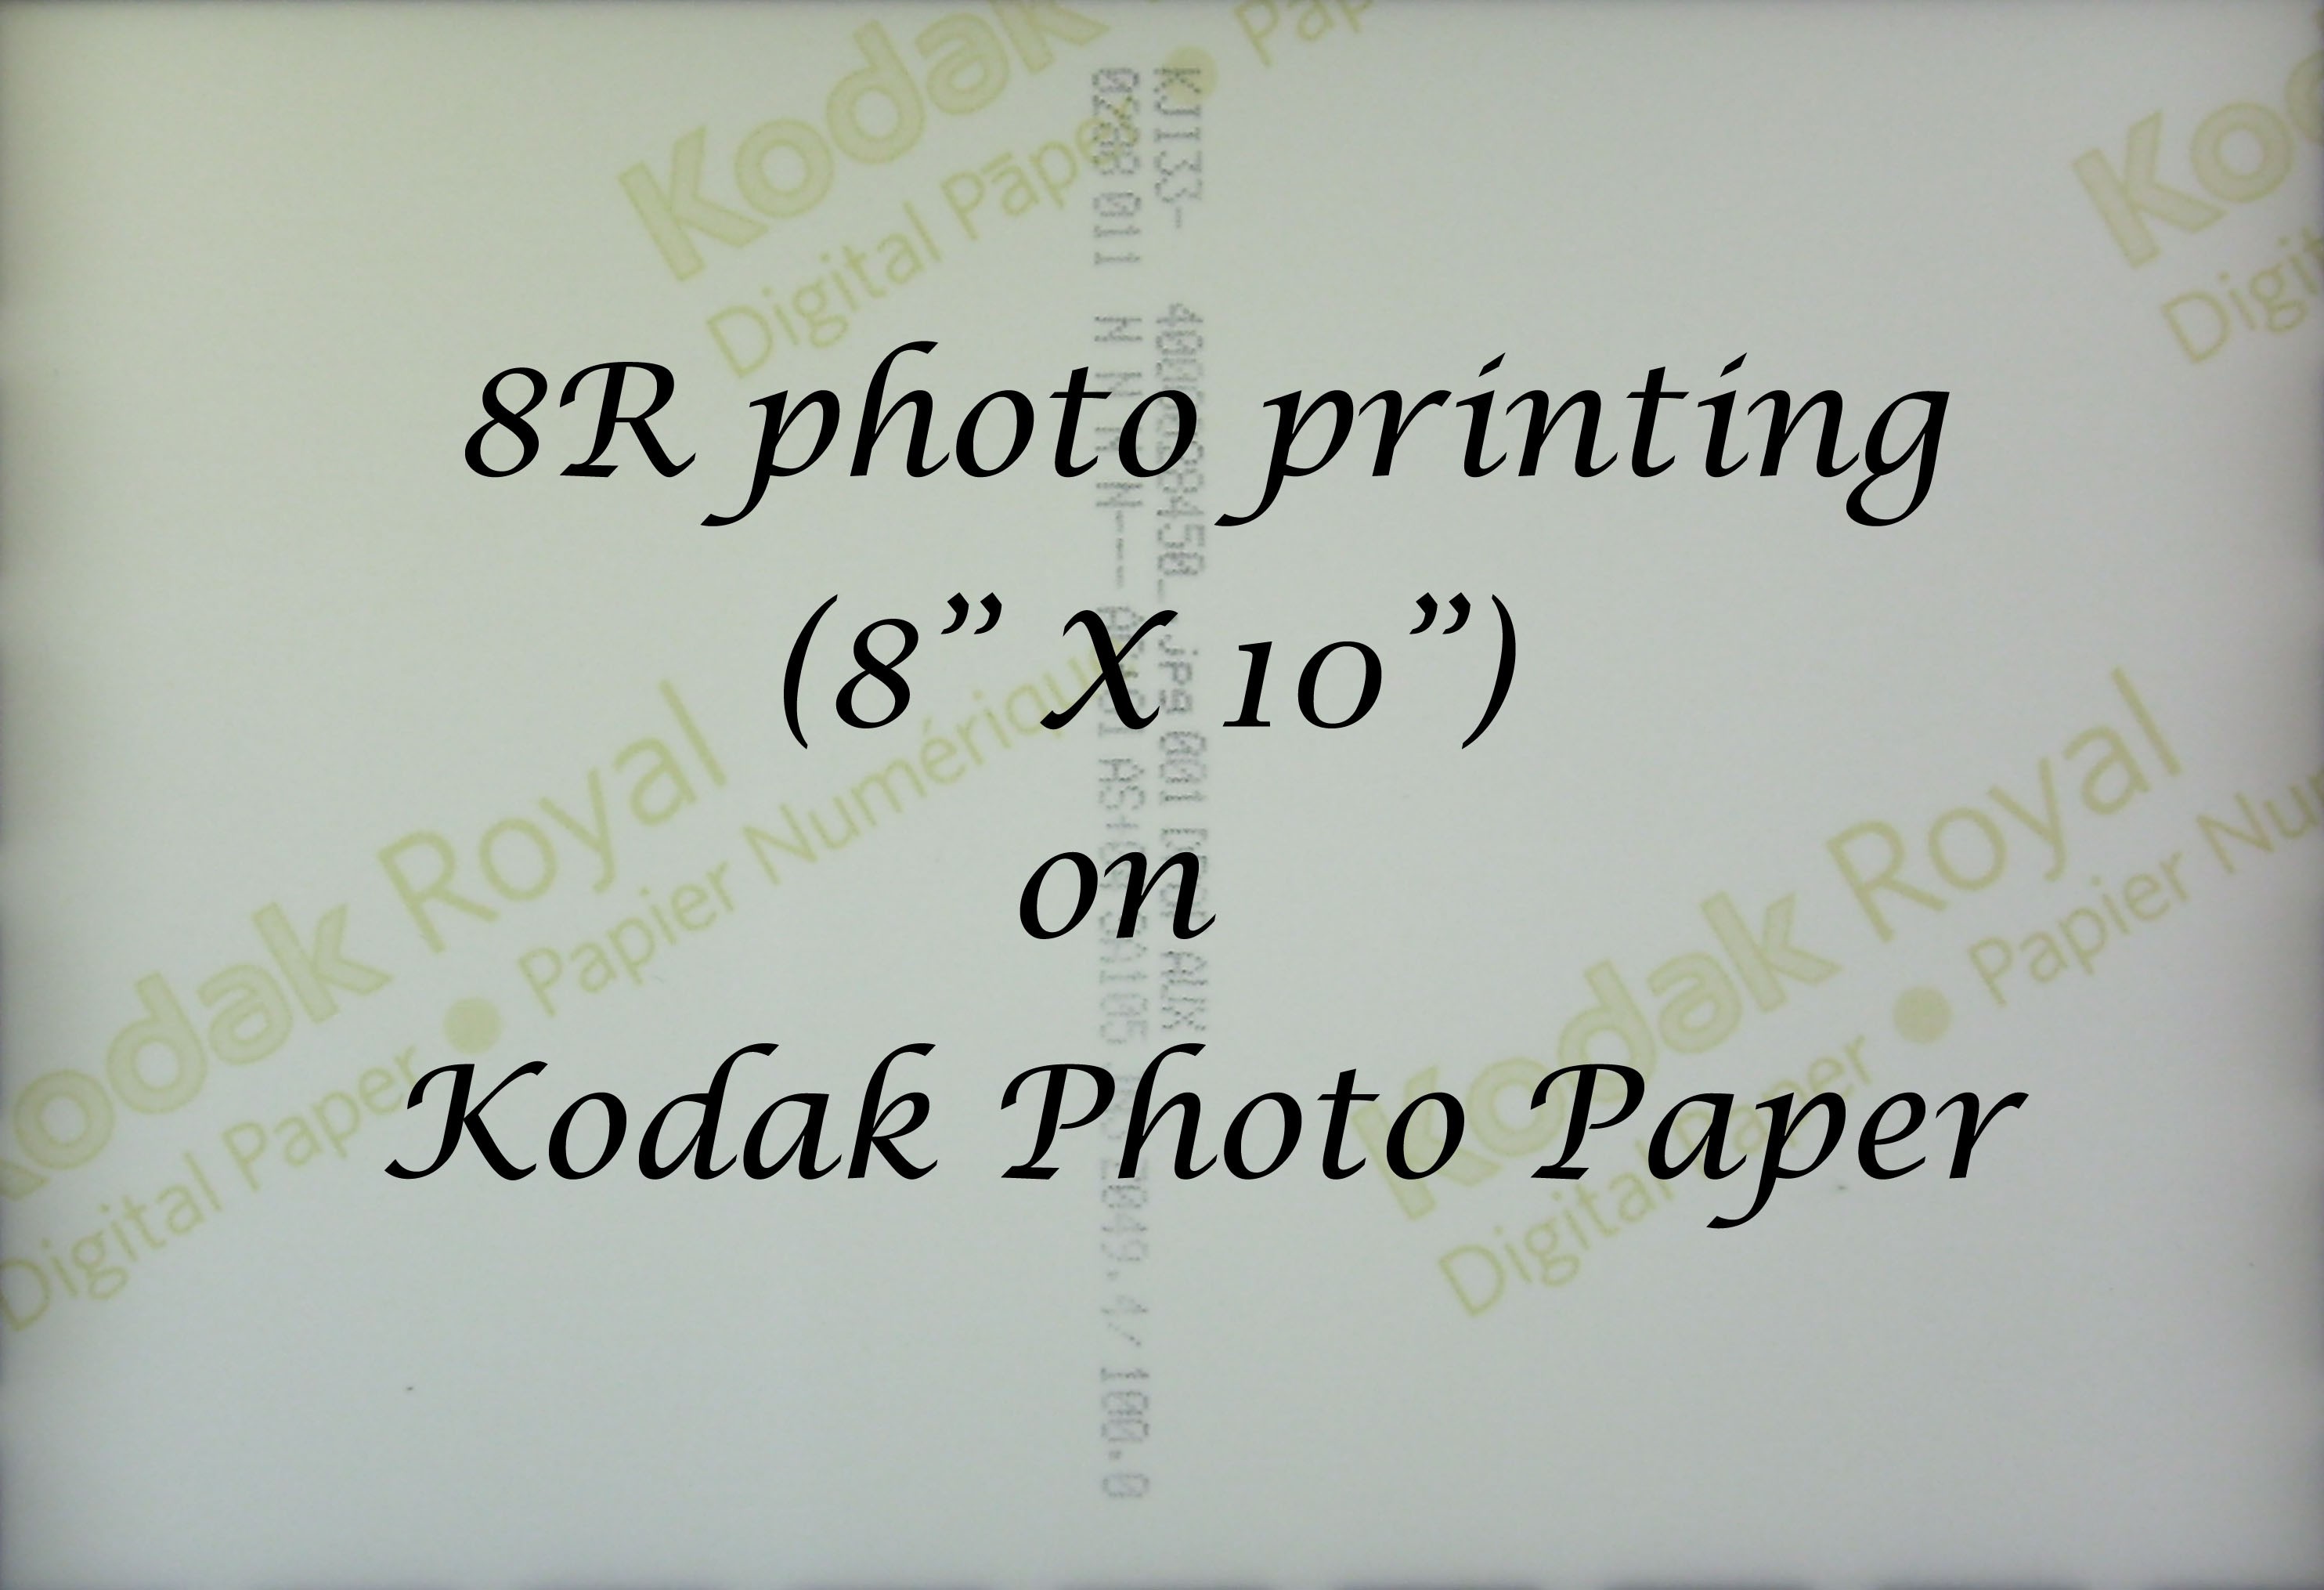 8R photo printing